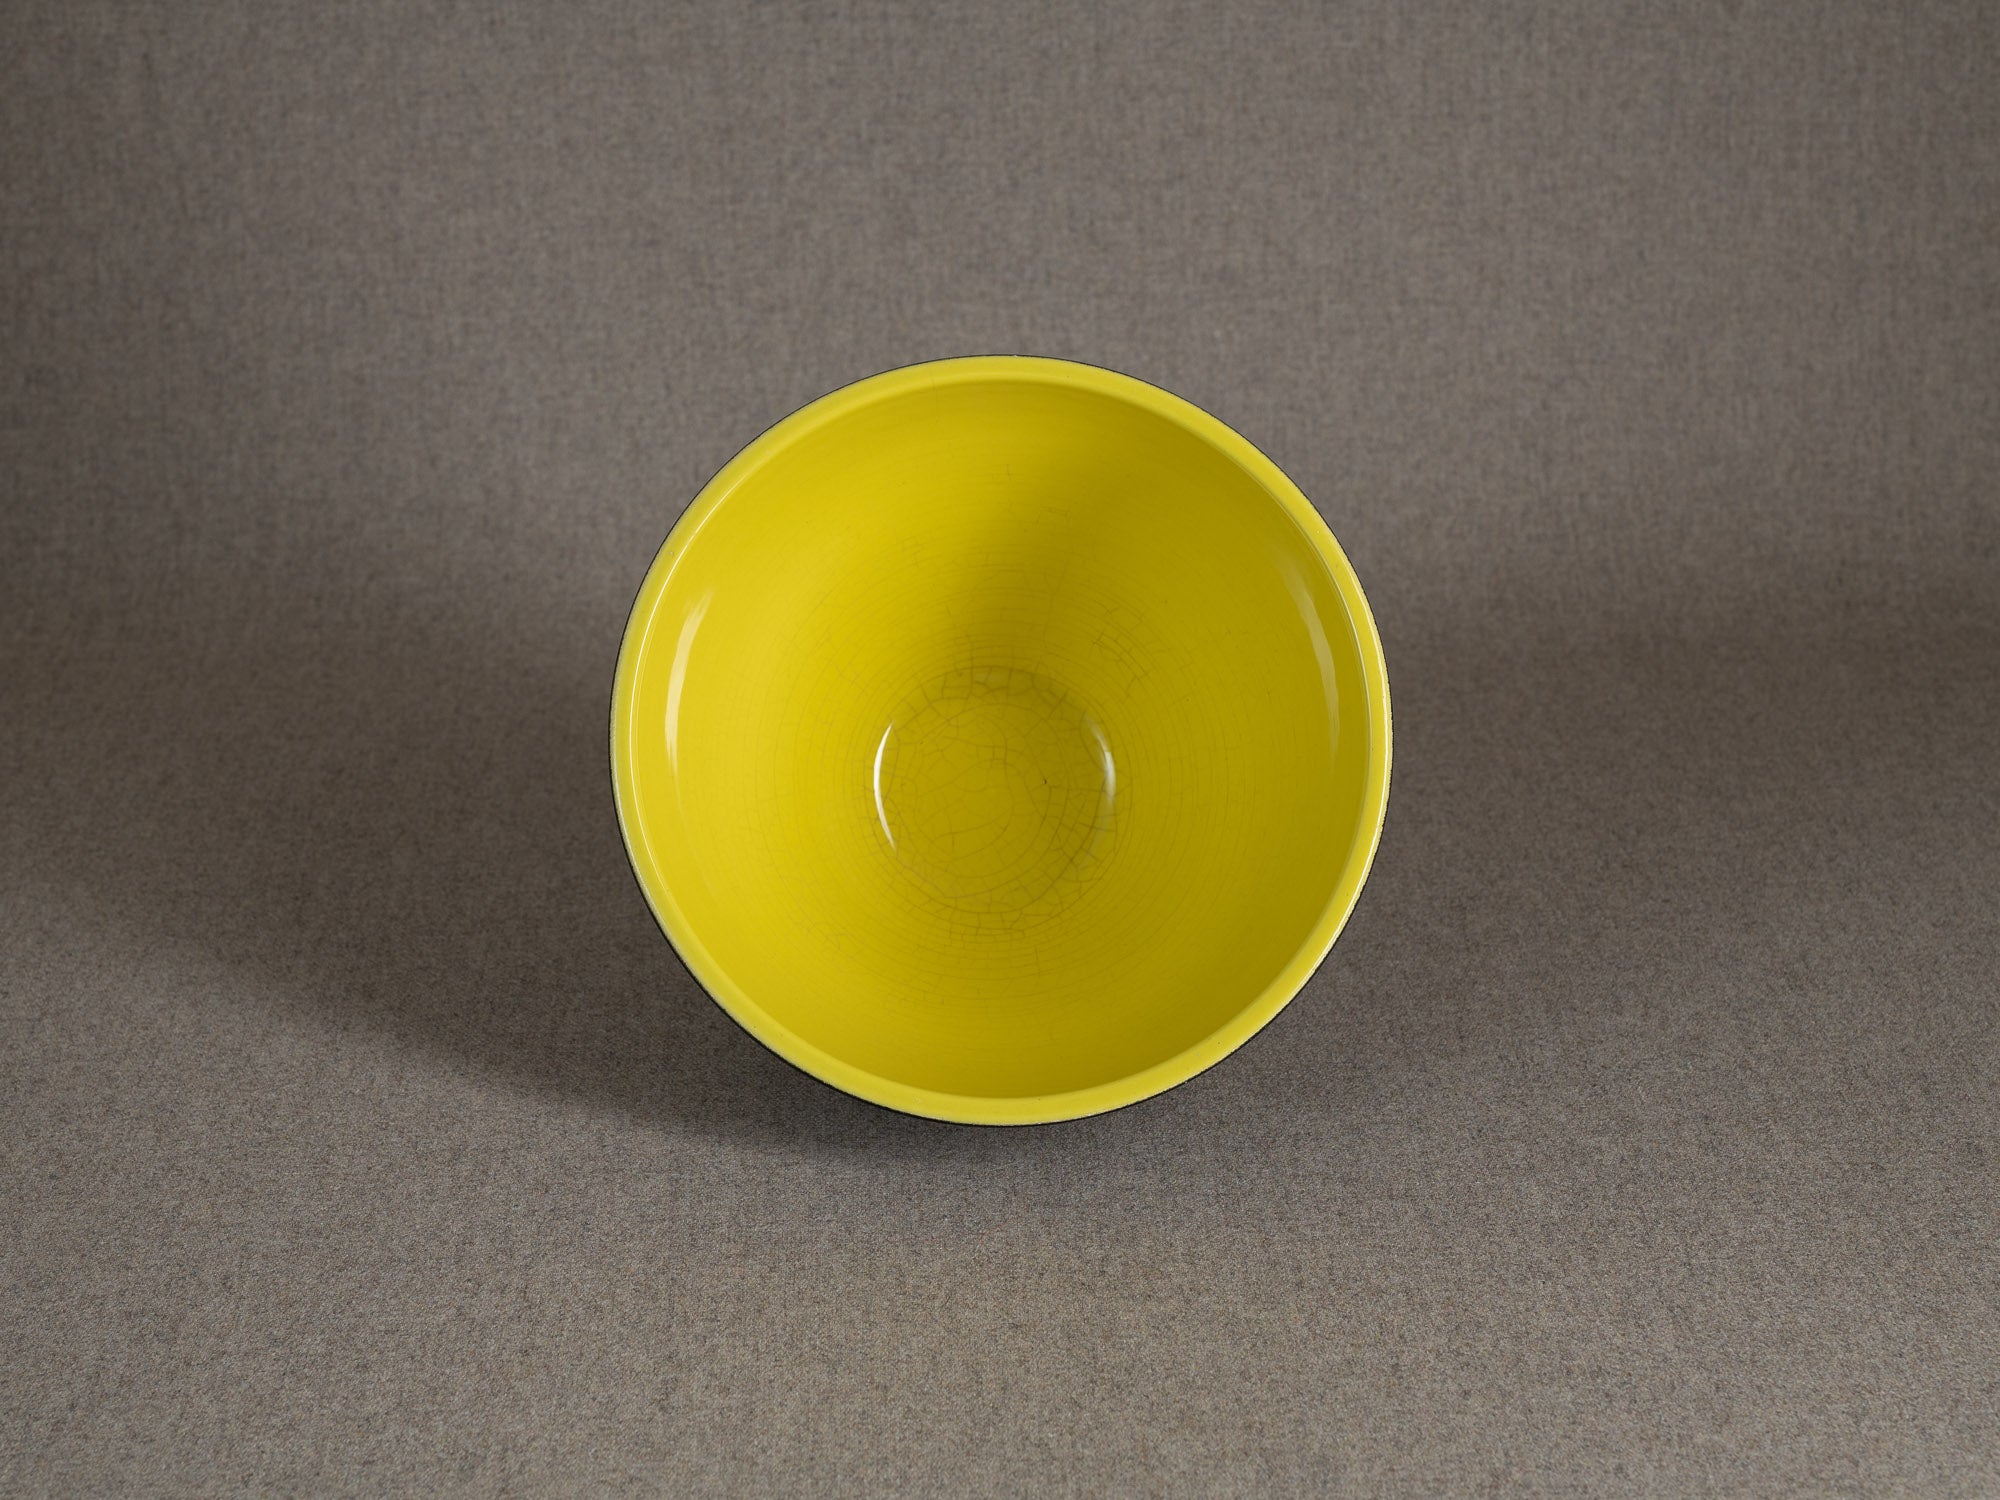 Suite de coupes gigognes "constructivistes" par Fernand Elchinger à Soufflenheim, France (vers 1955-58)..Set of 3 "bauhaus" bowls by Fernand Elchinger in Soufflenheim, France (circa 1955-58)